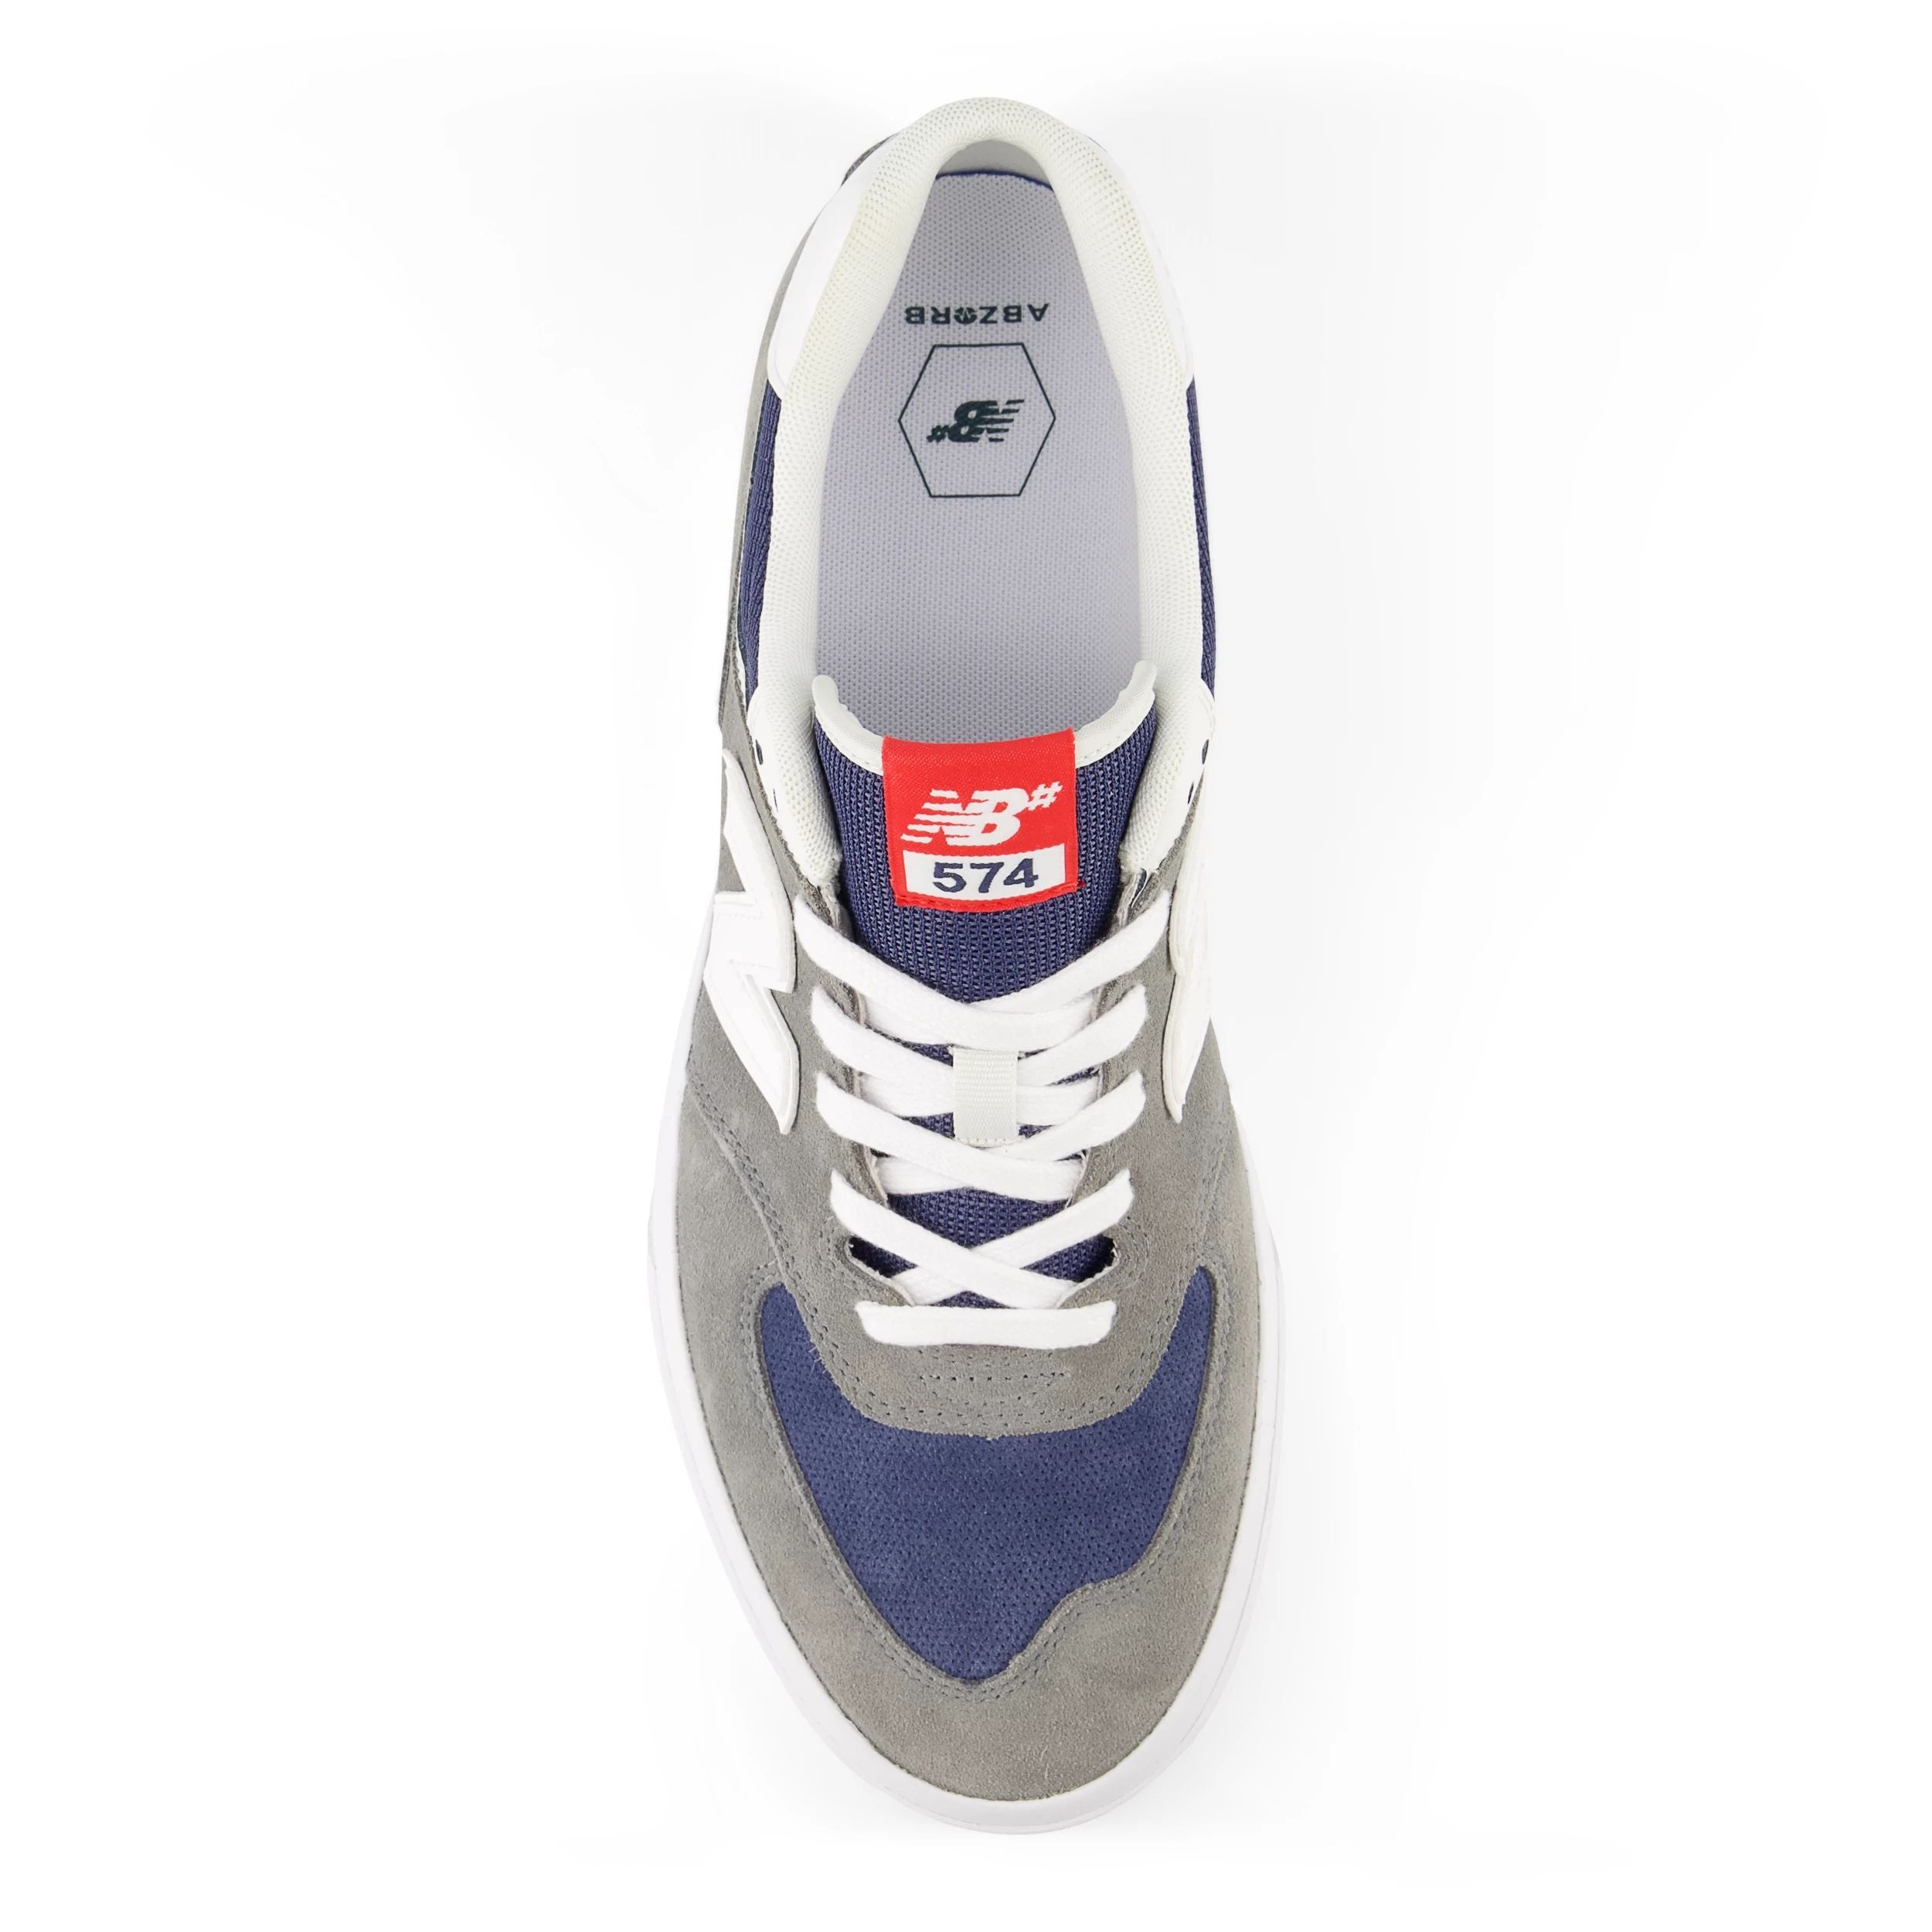 Grey/White NM574 Vulc Wide NB Numeric Skate Shoe Top